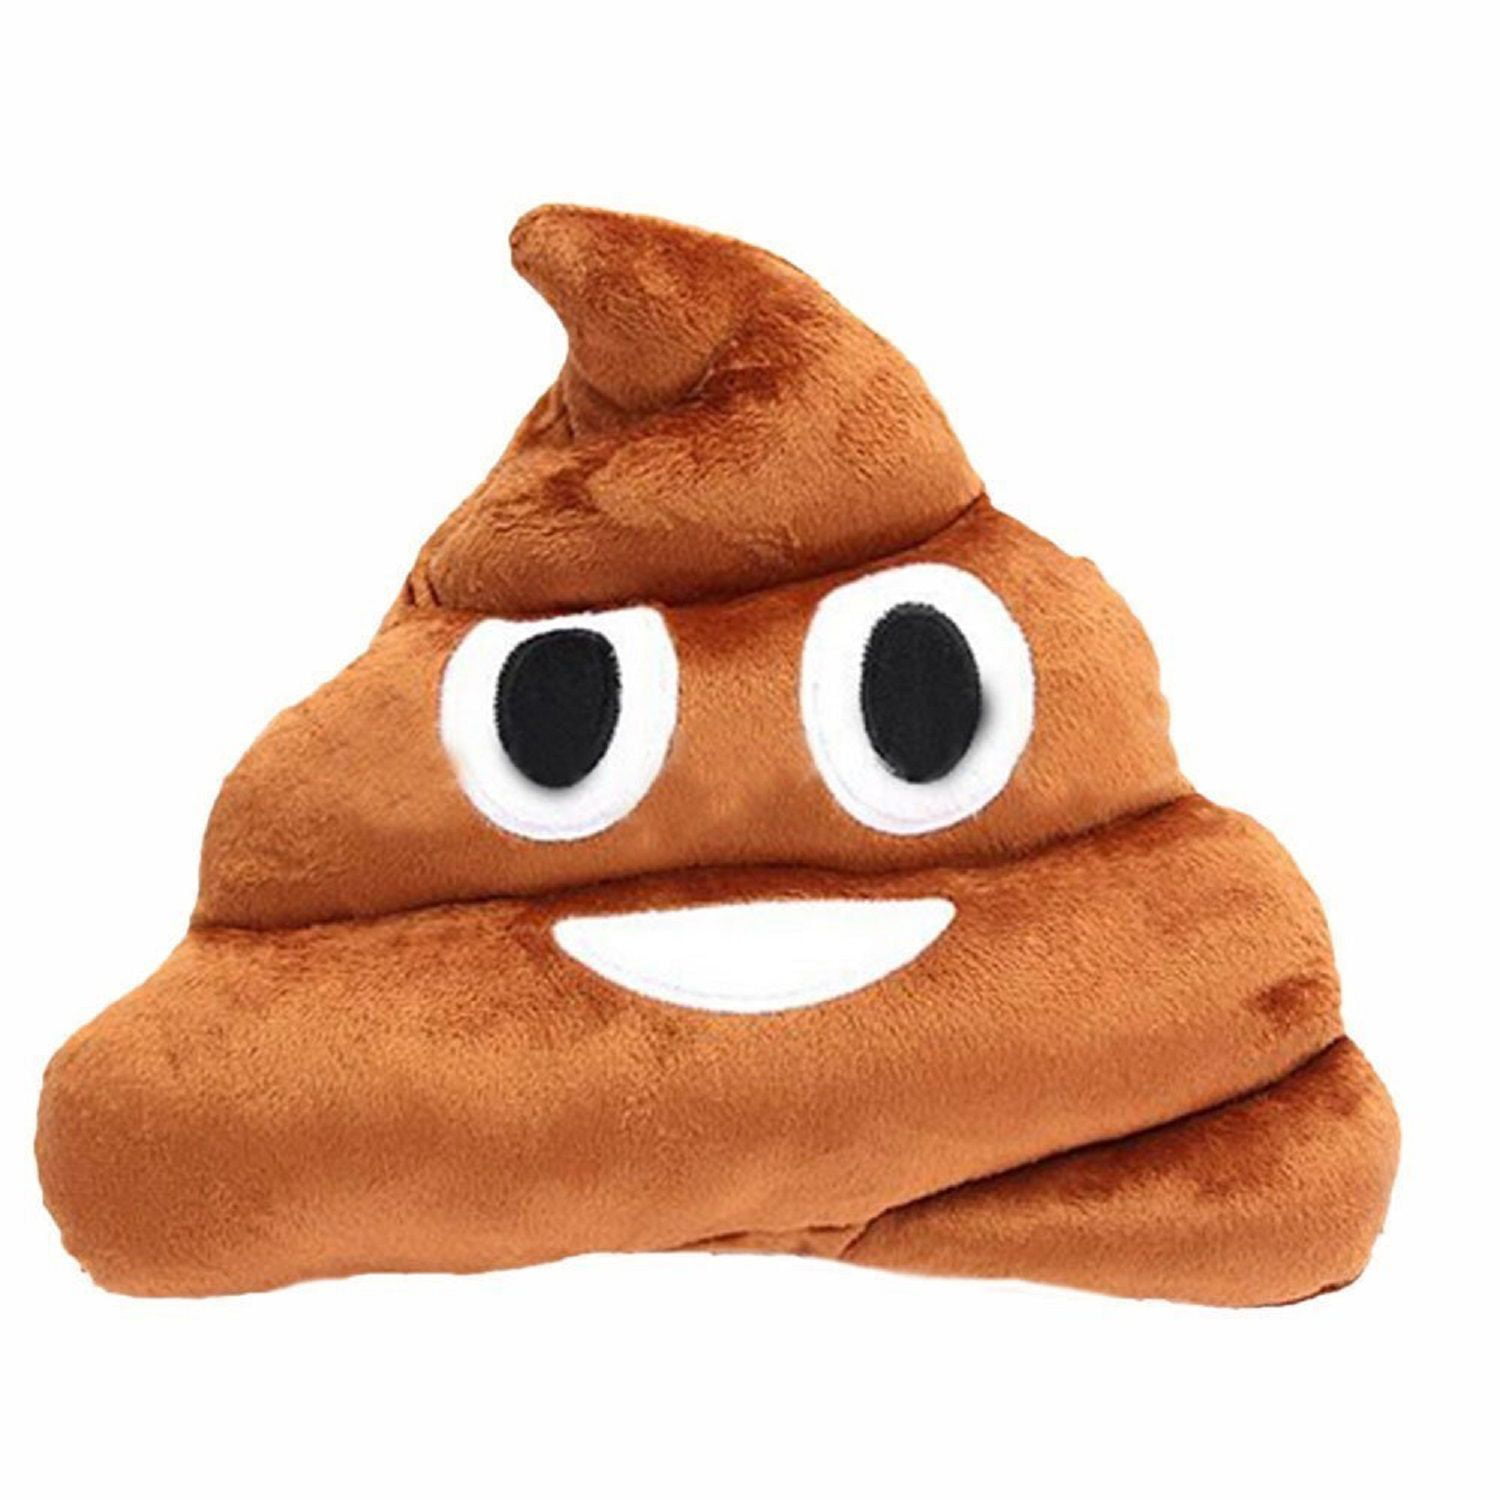 USA SELLER LARGE 13" inch 33 cm Emoji Brown Poop Pillow Smile Emoticon Angry Poo 